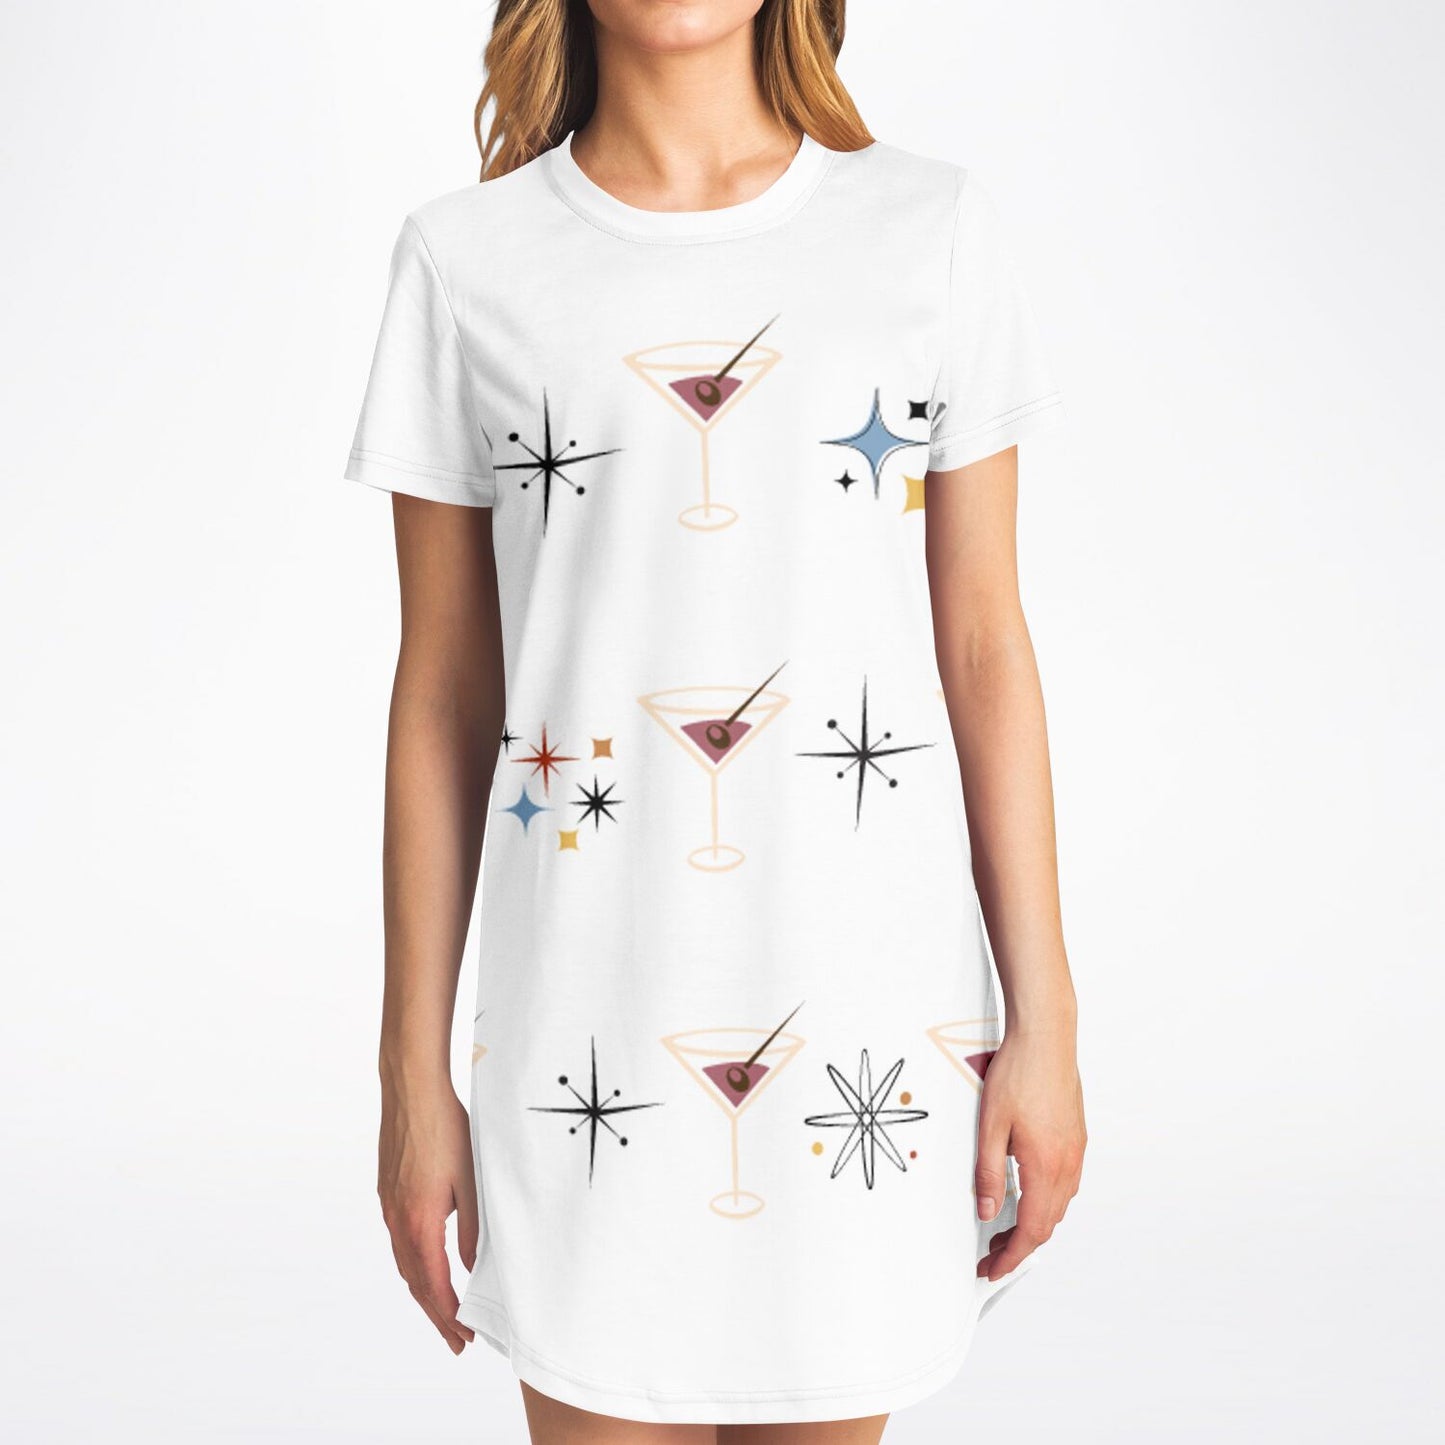 Martinis and Stars T-Shirt Dress